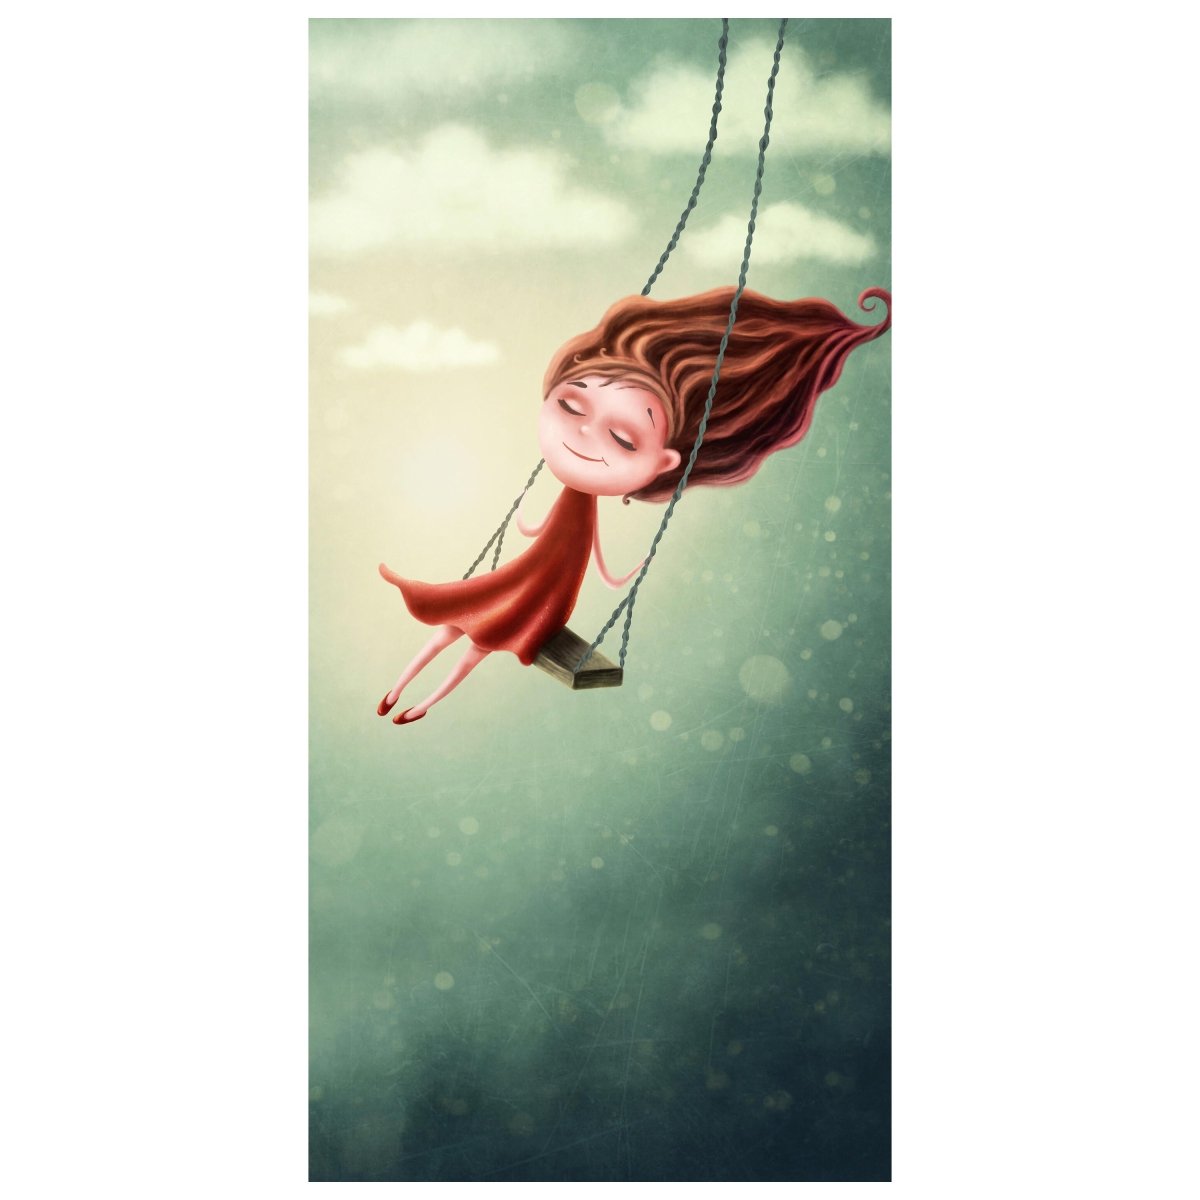 Türtapete Mädchen, Schaukel, Himmel, Illustration M1258 - Bild 2